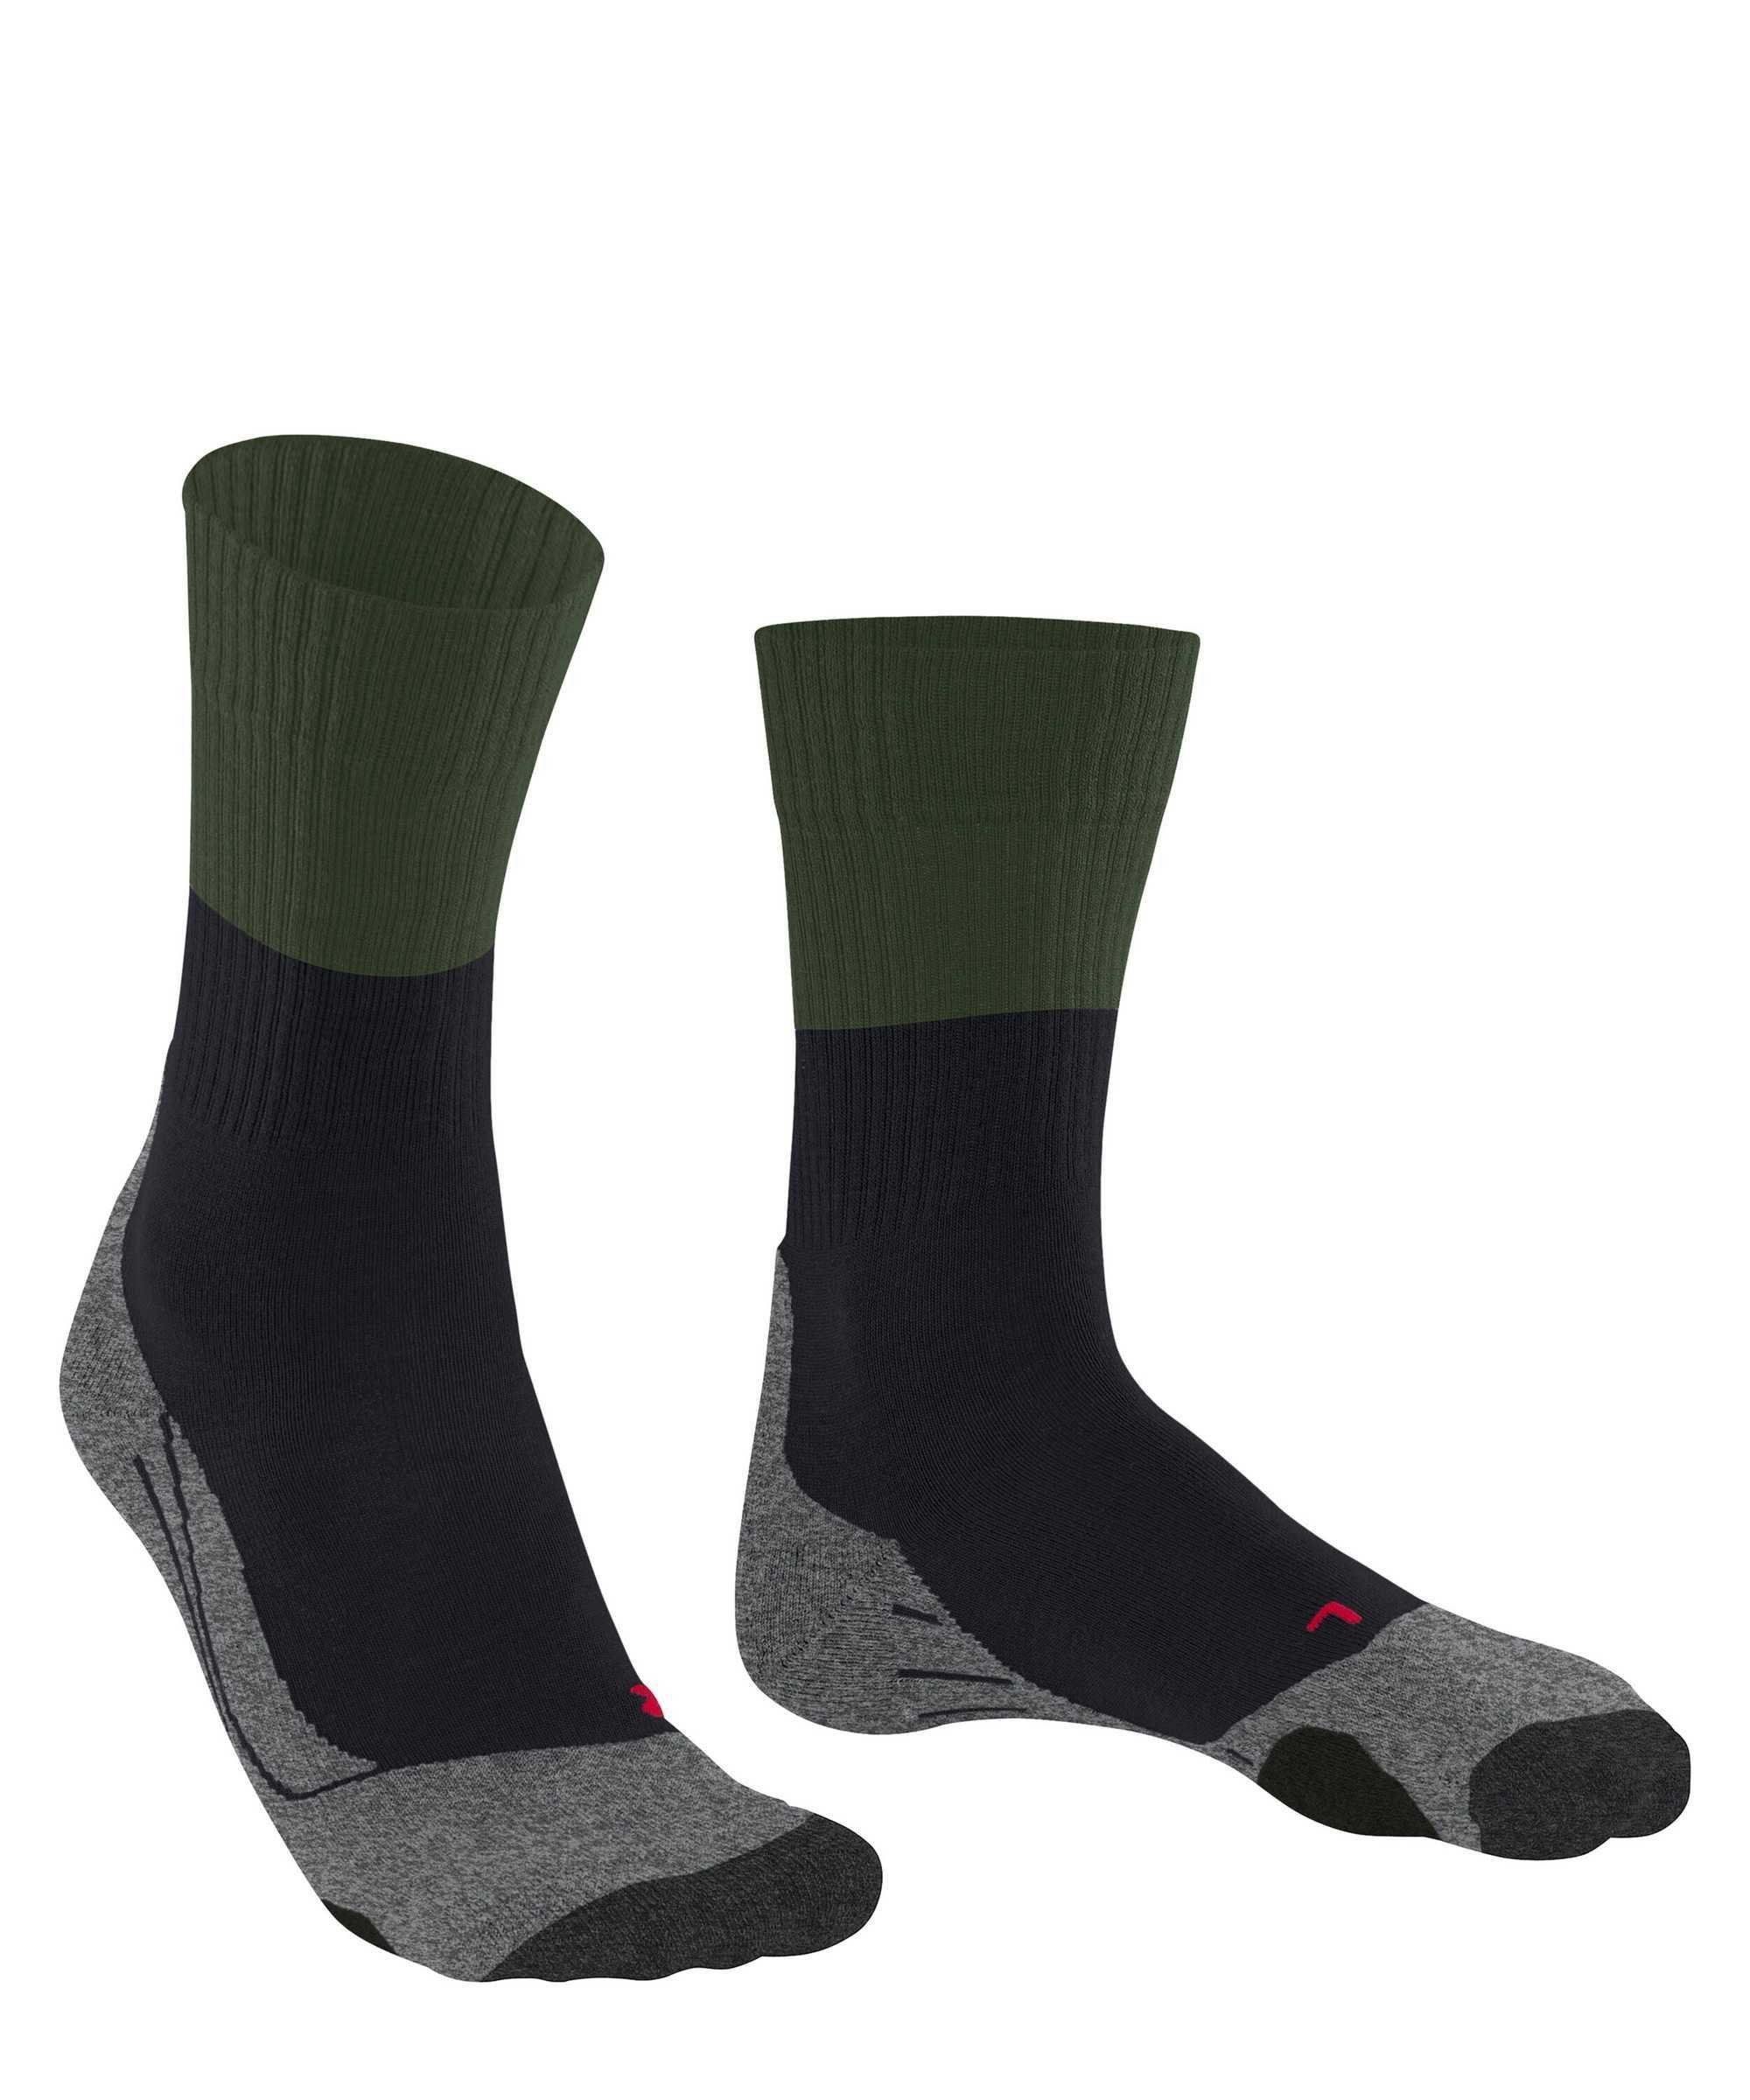 FALKE Sportsocken Socken (Vertigo) Herren TK2, Schwarz/Grau/Grün - Trekking Socken Polsterung